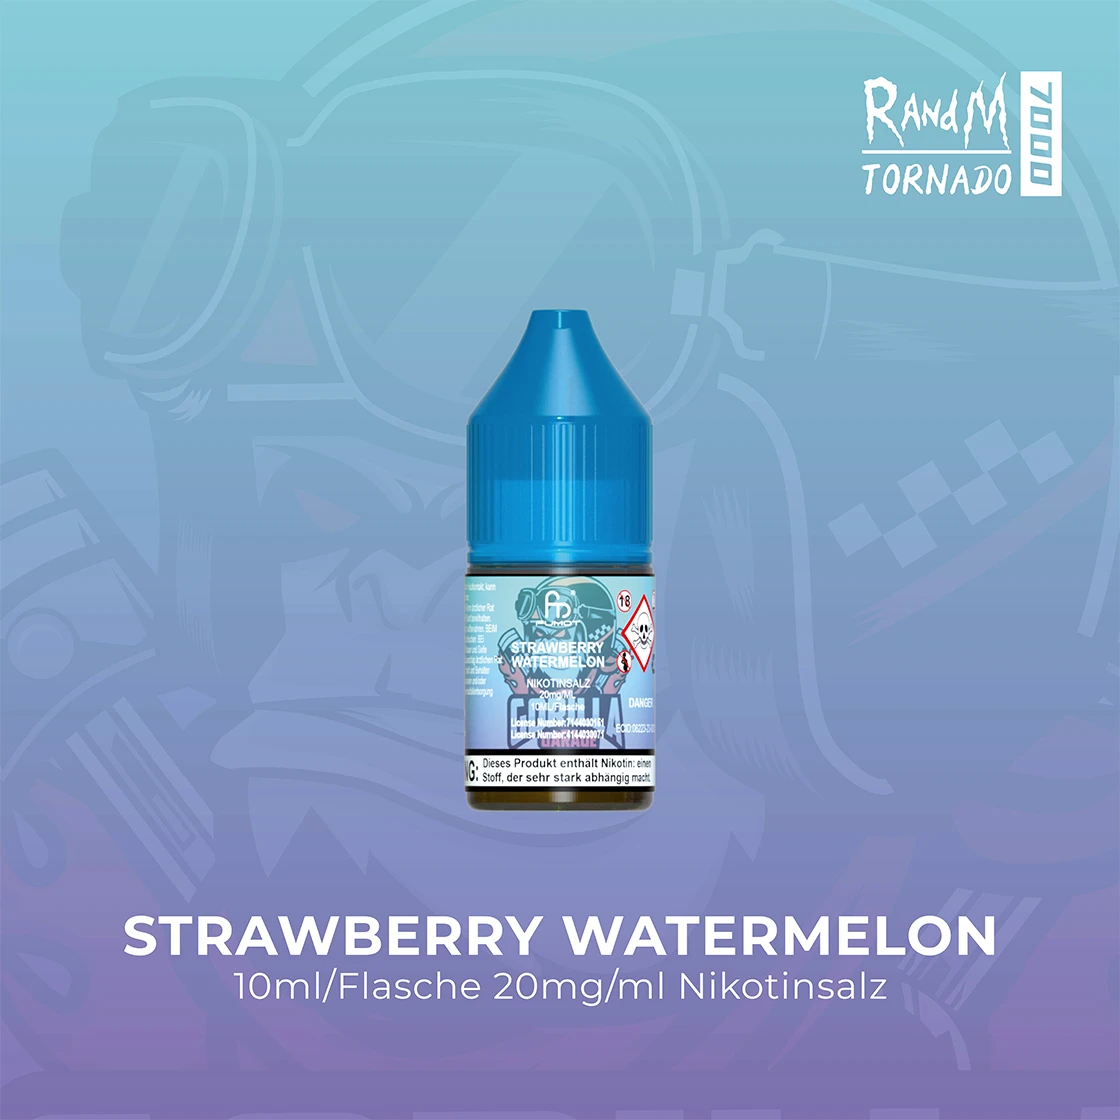 RandM Tornado 7000 Strawberry Watermelon E-Liquid Nikotinsalz 20 mg | Vape Liquids 1